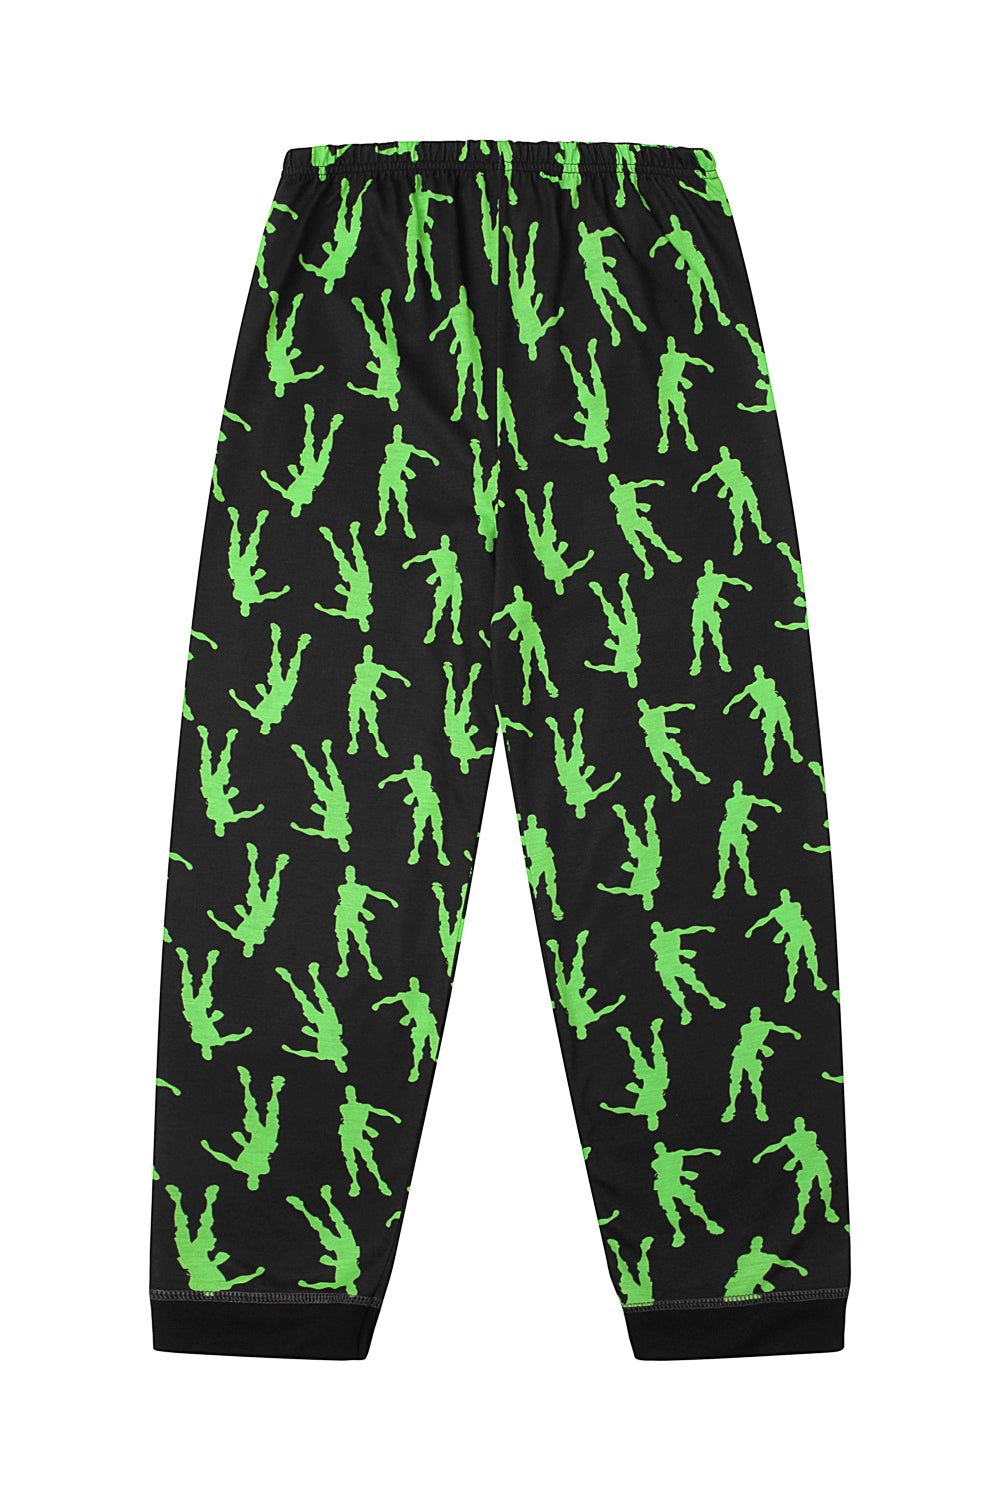 Floss Like a Boss  Emote Dance Gaming Long Pyjamas Green - Pyjamas.com